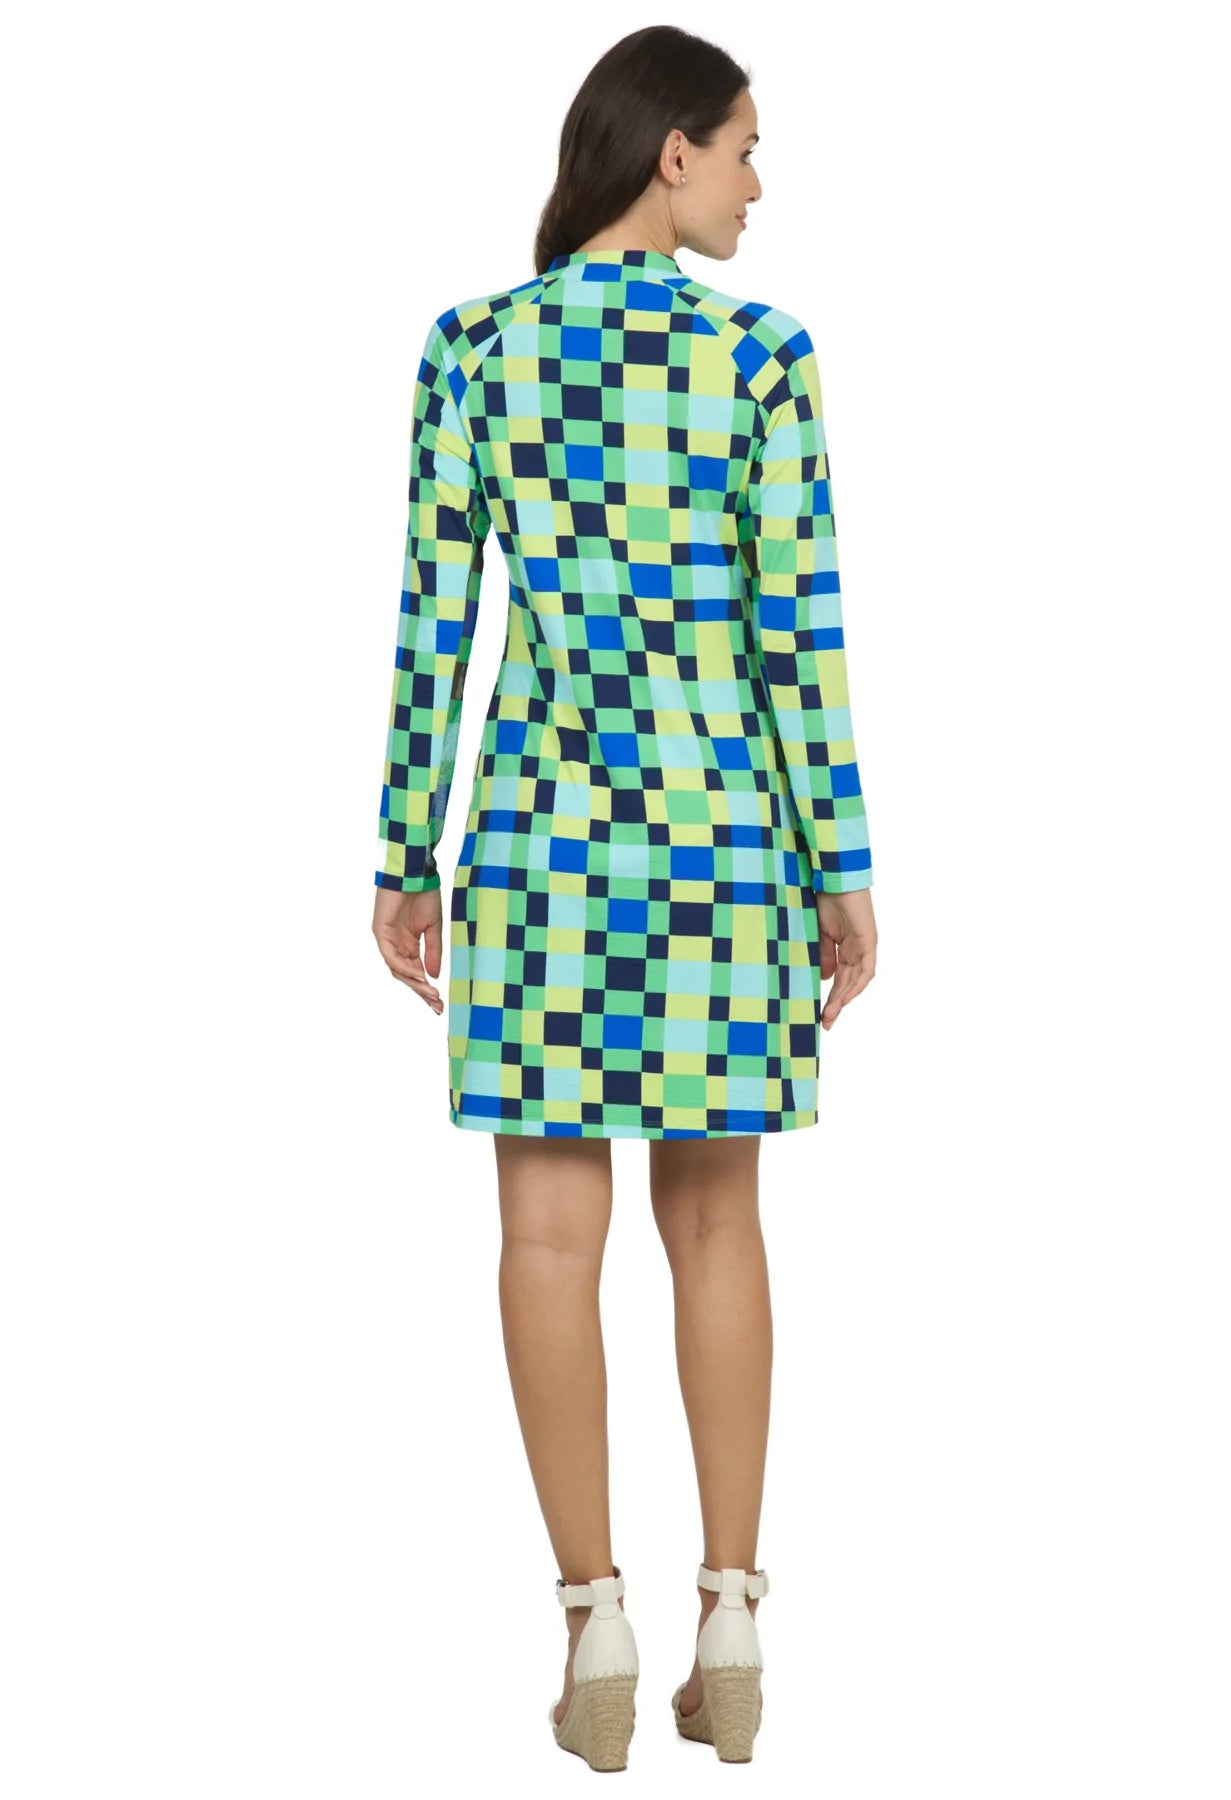 IBKUL- Long Sleeve Annalise Green/Blue Dress (Style#: 68379)